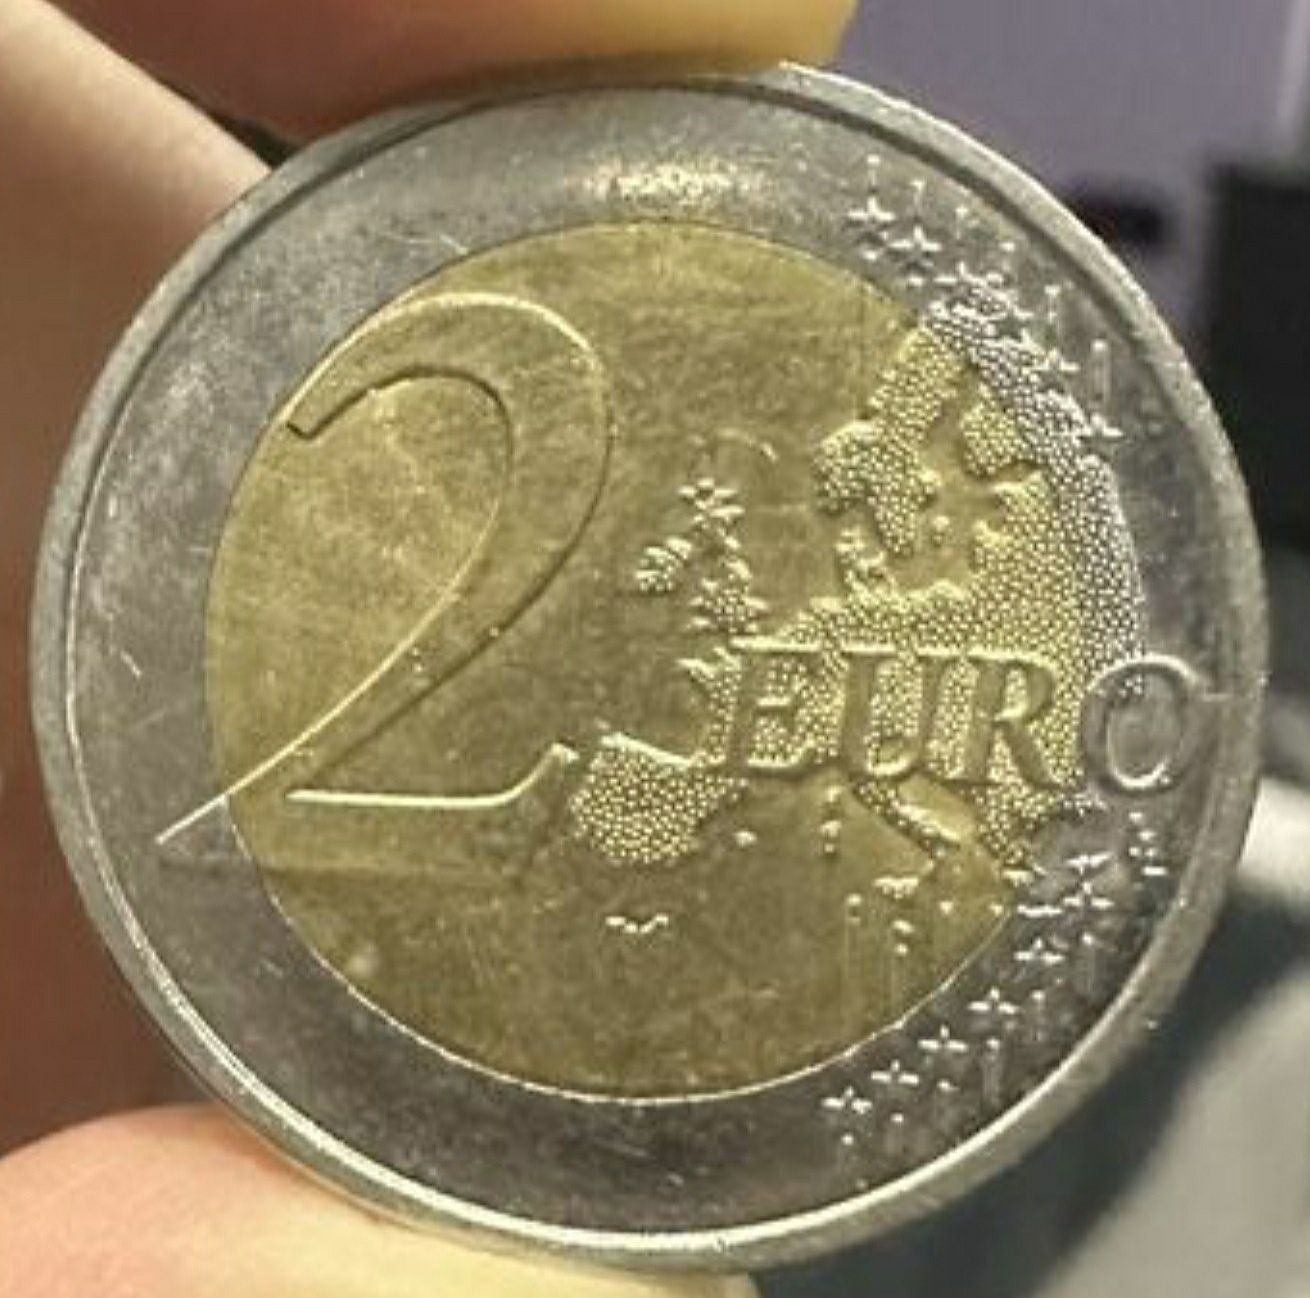 Unikalna moneta 2 euro z Francji z błędem Destrukt Error